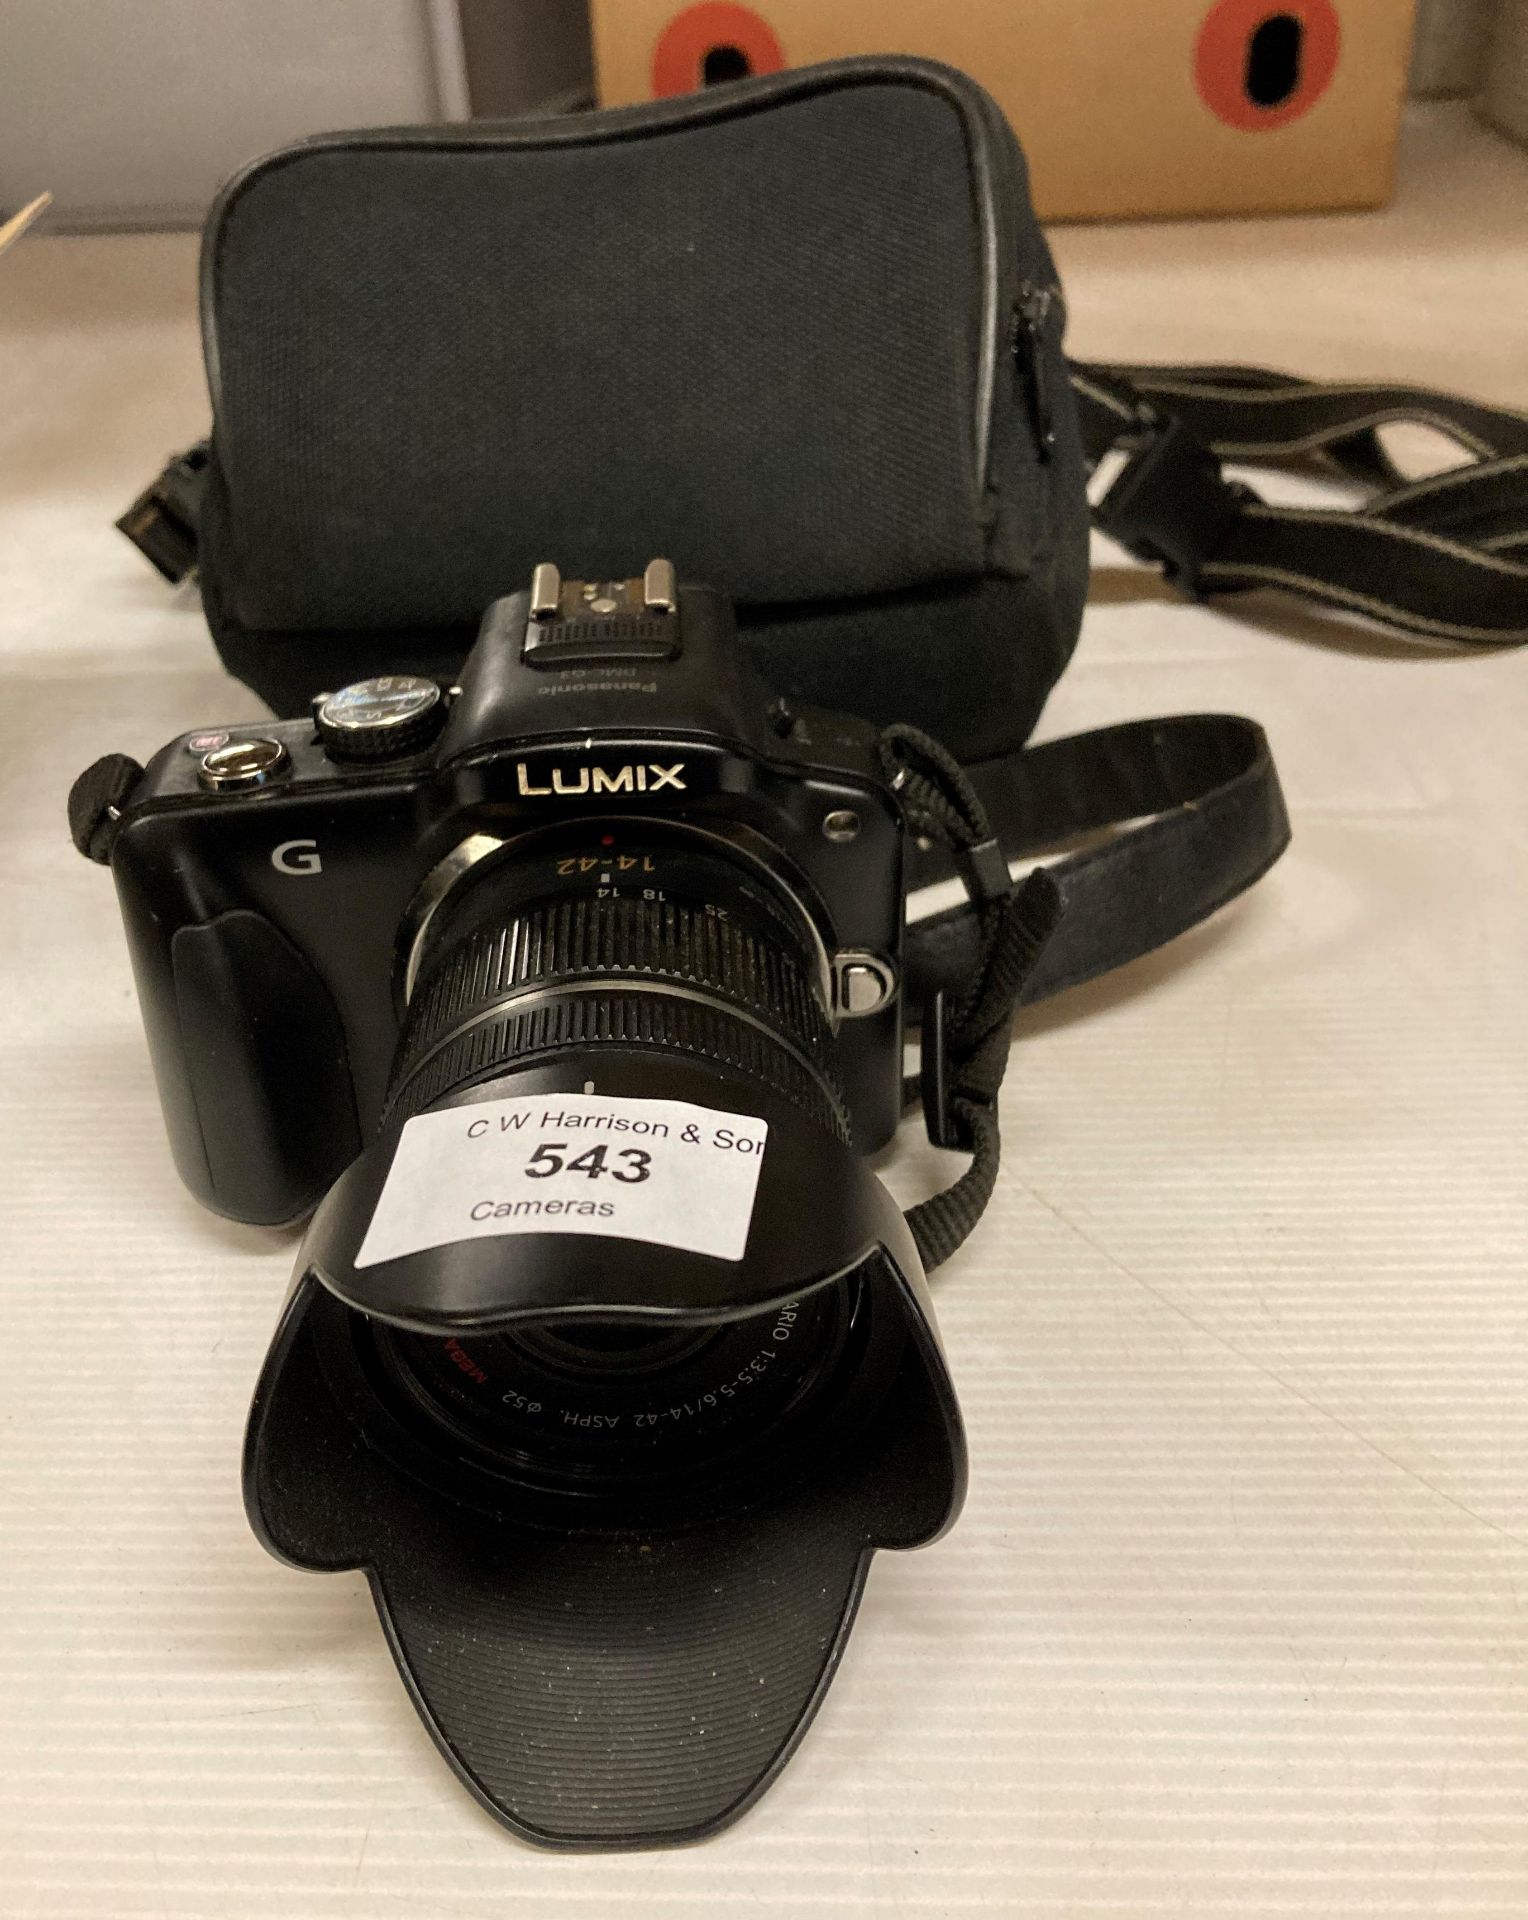 Panasoinc Lumix DMC-63 digital camera c/w 14-42mm lens and carry case (no charger) (saleroom